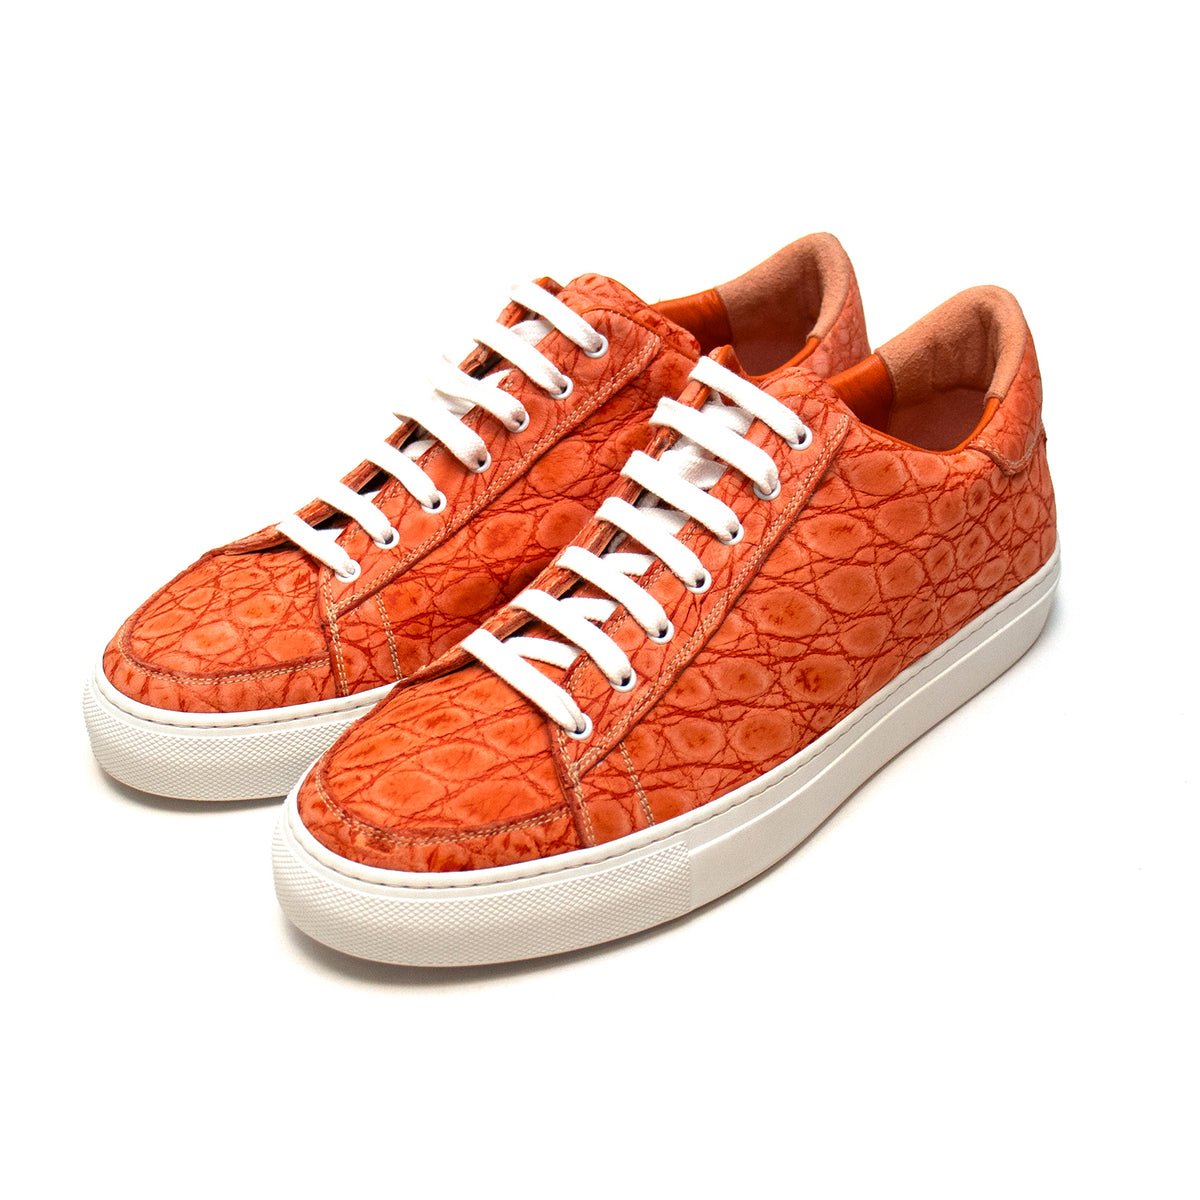 New York Orange Sneakers